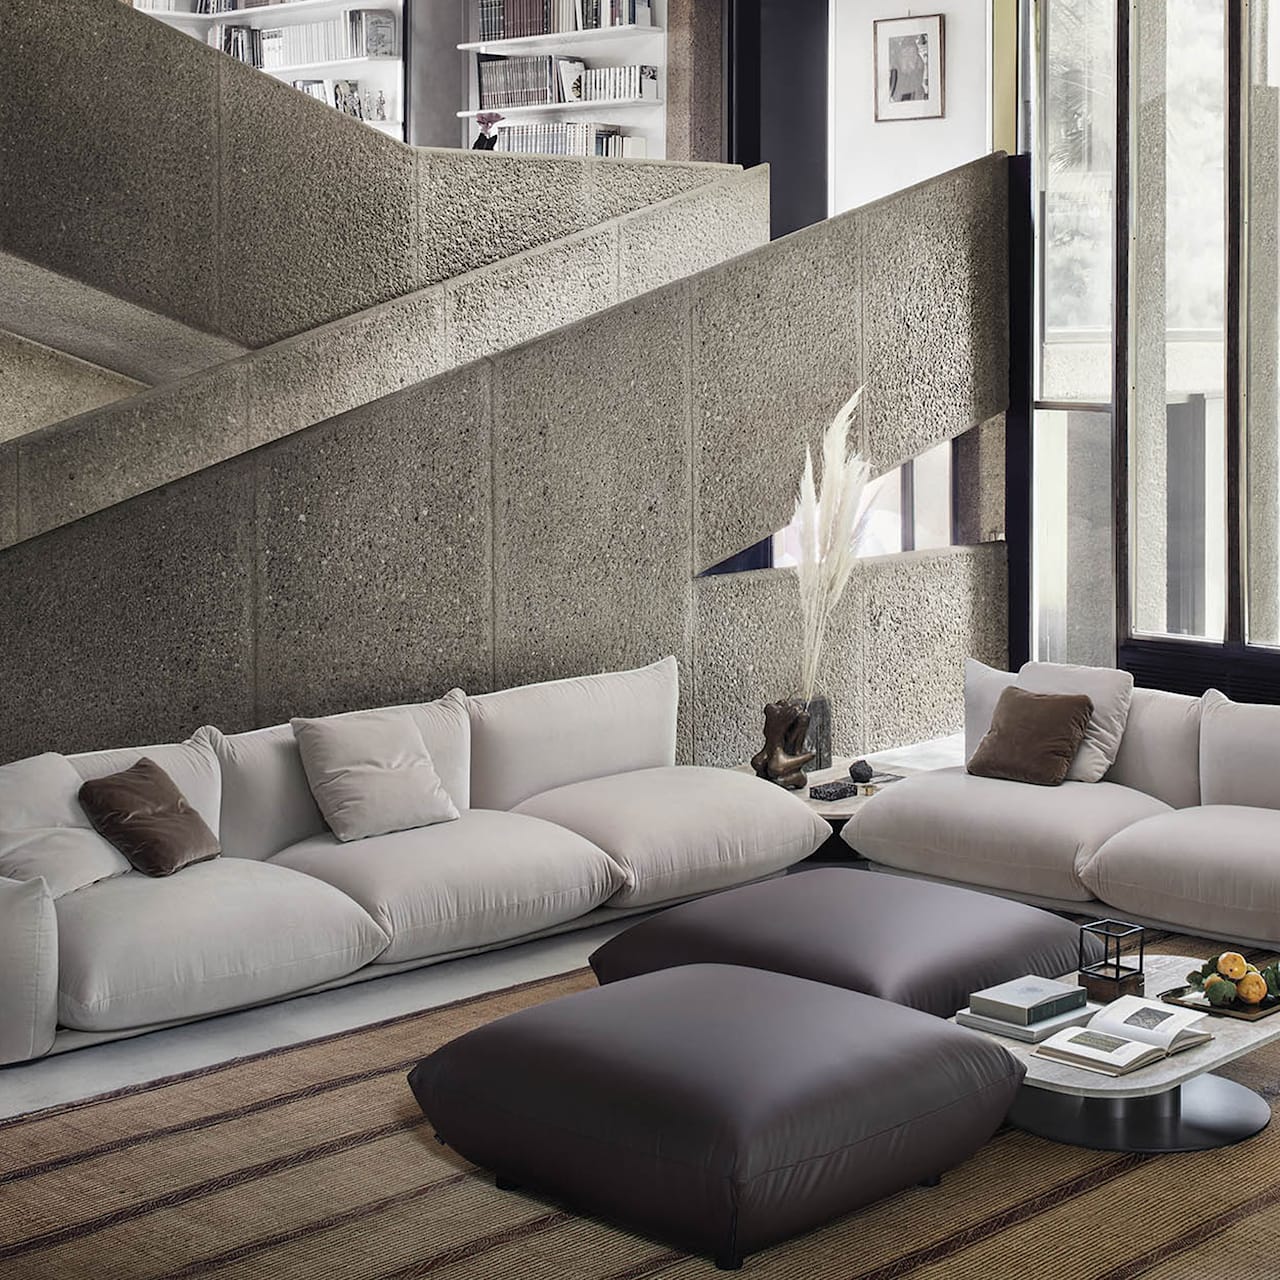 Marenco 2018 Modular Sofa